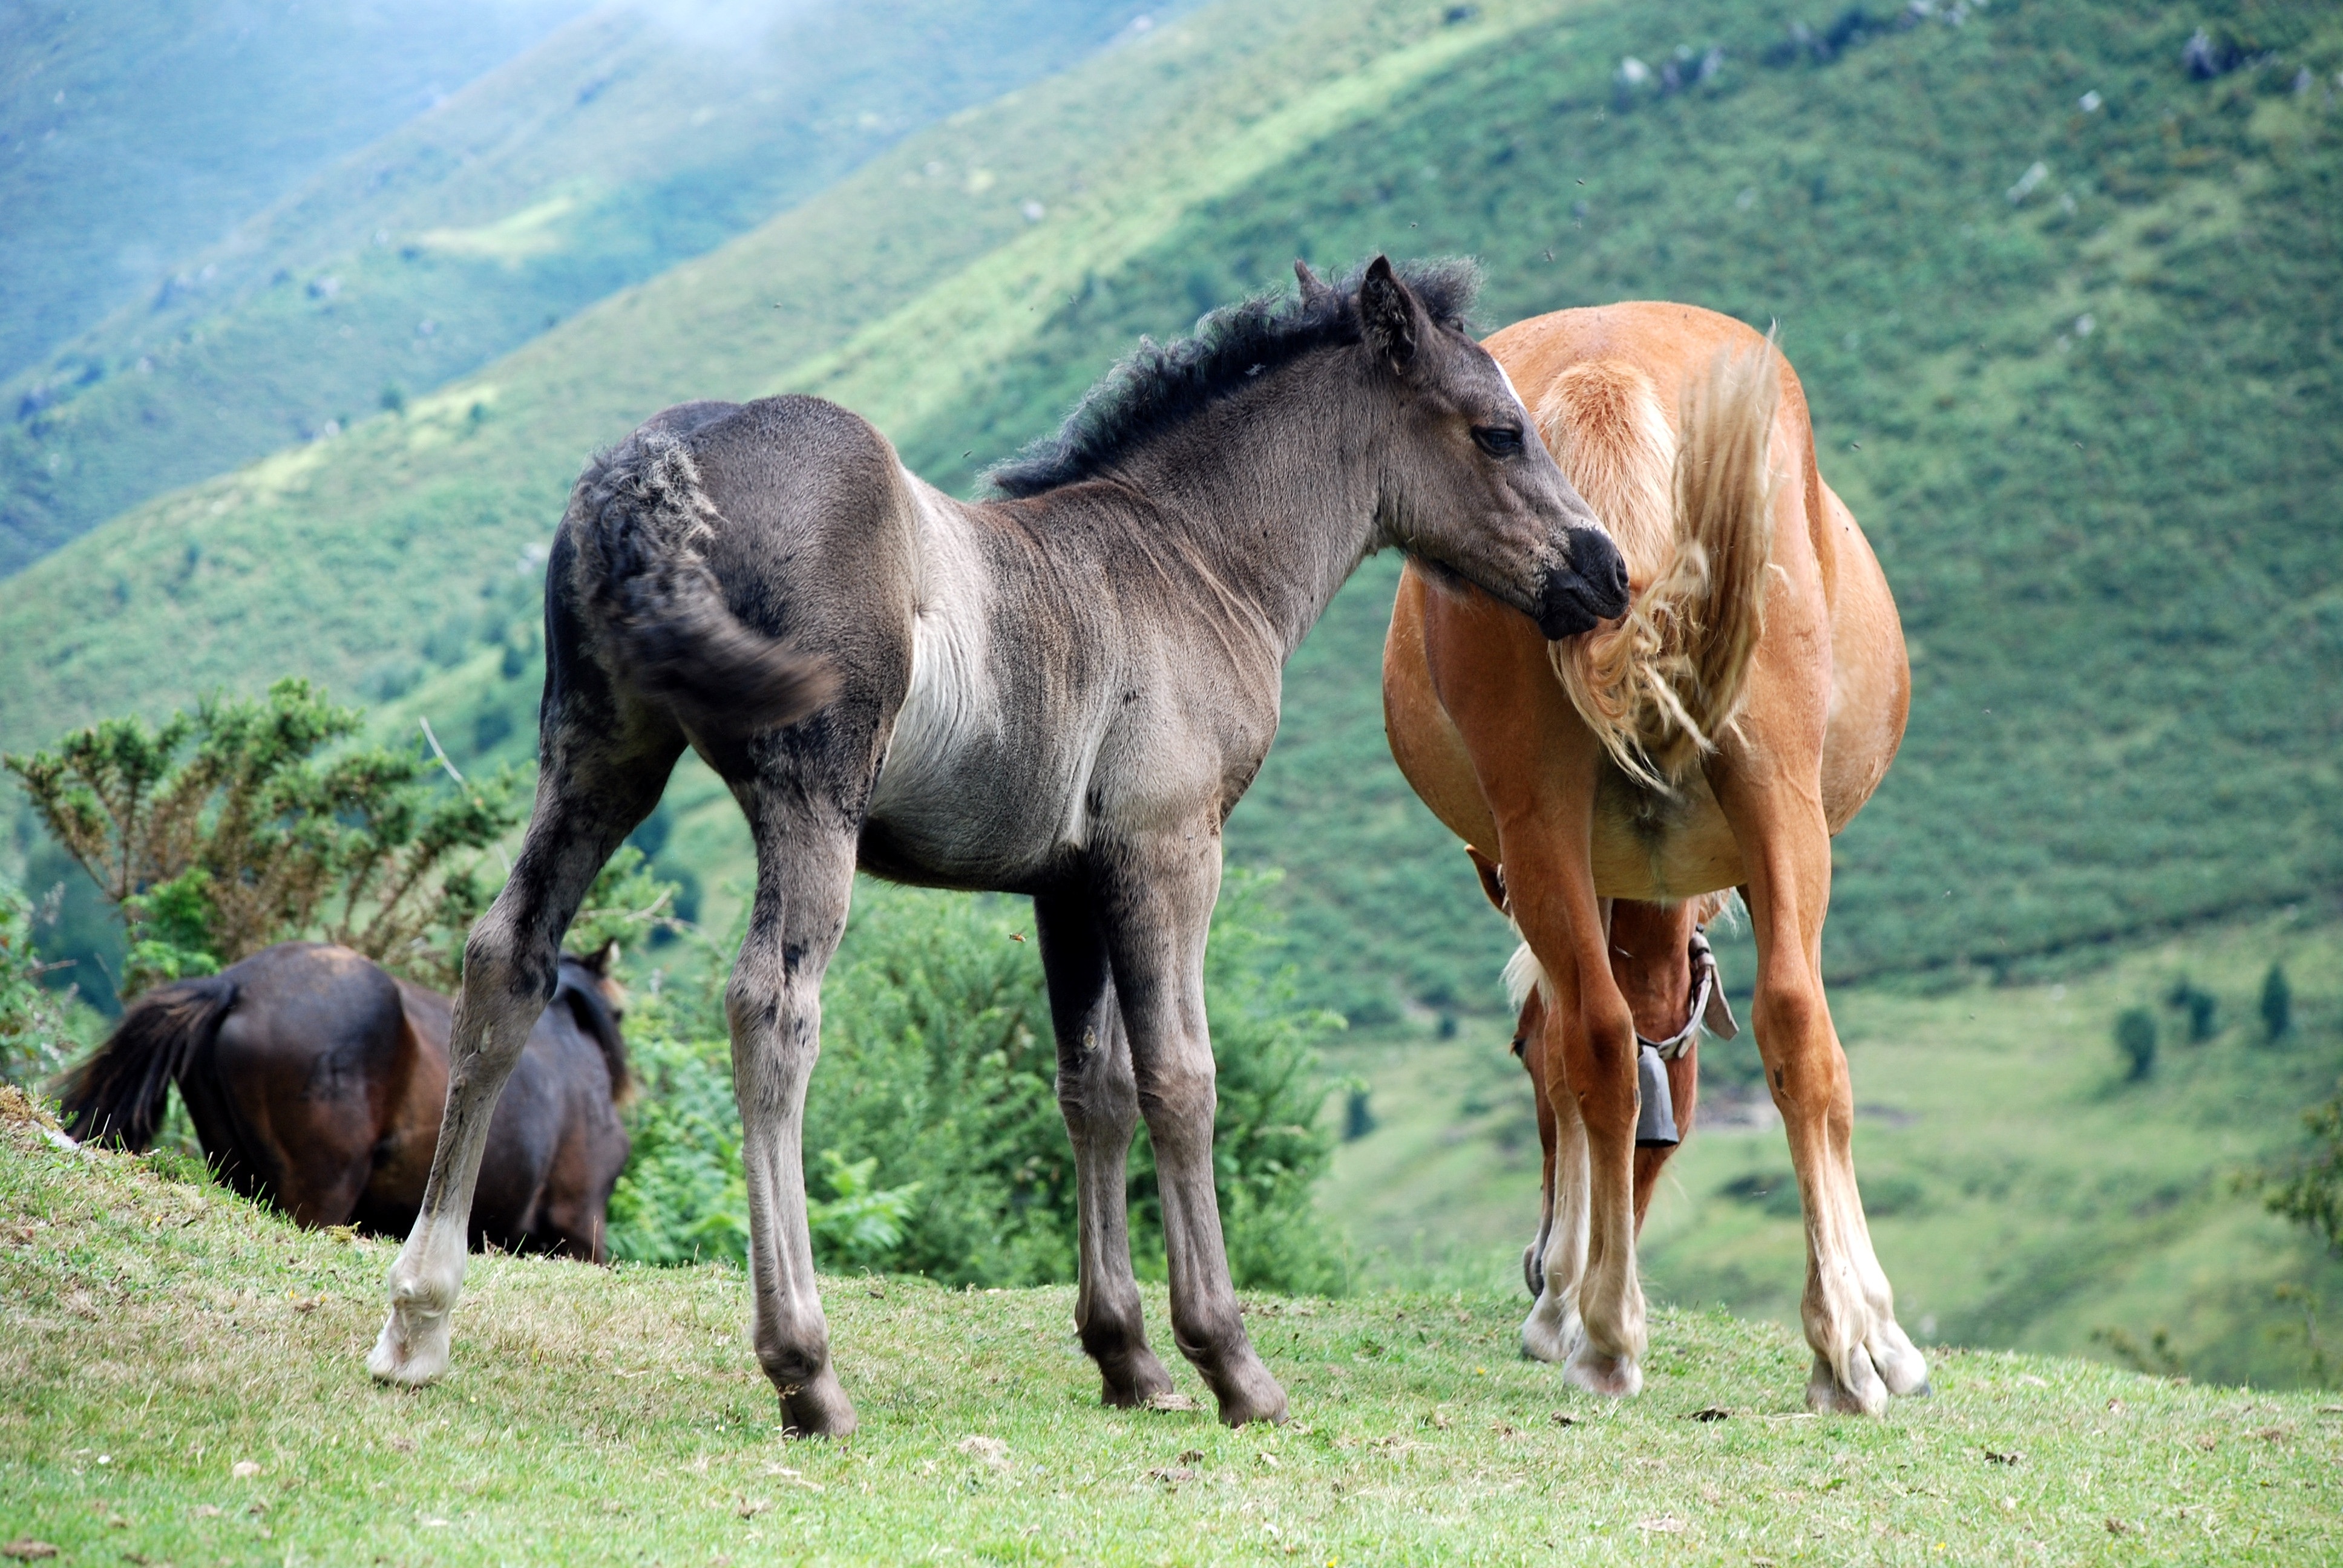 Wild, Horses, Nature, Purity, Asturias, horse, animal themes